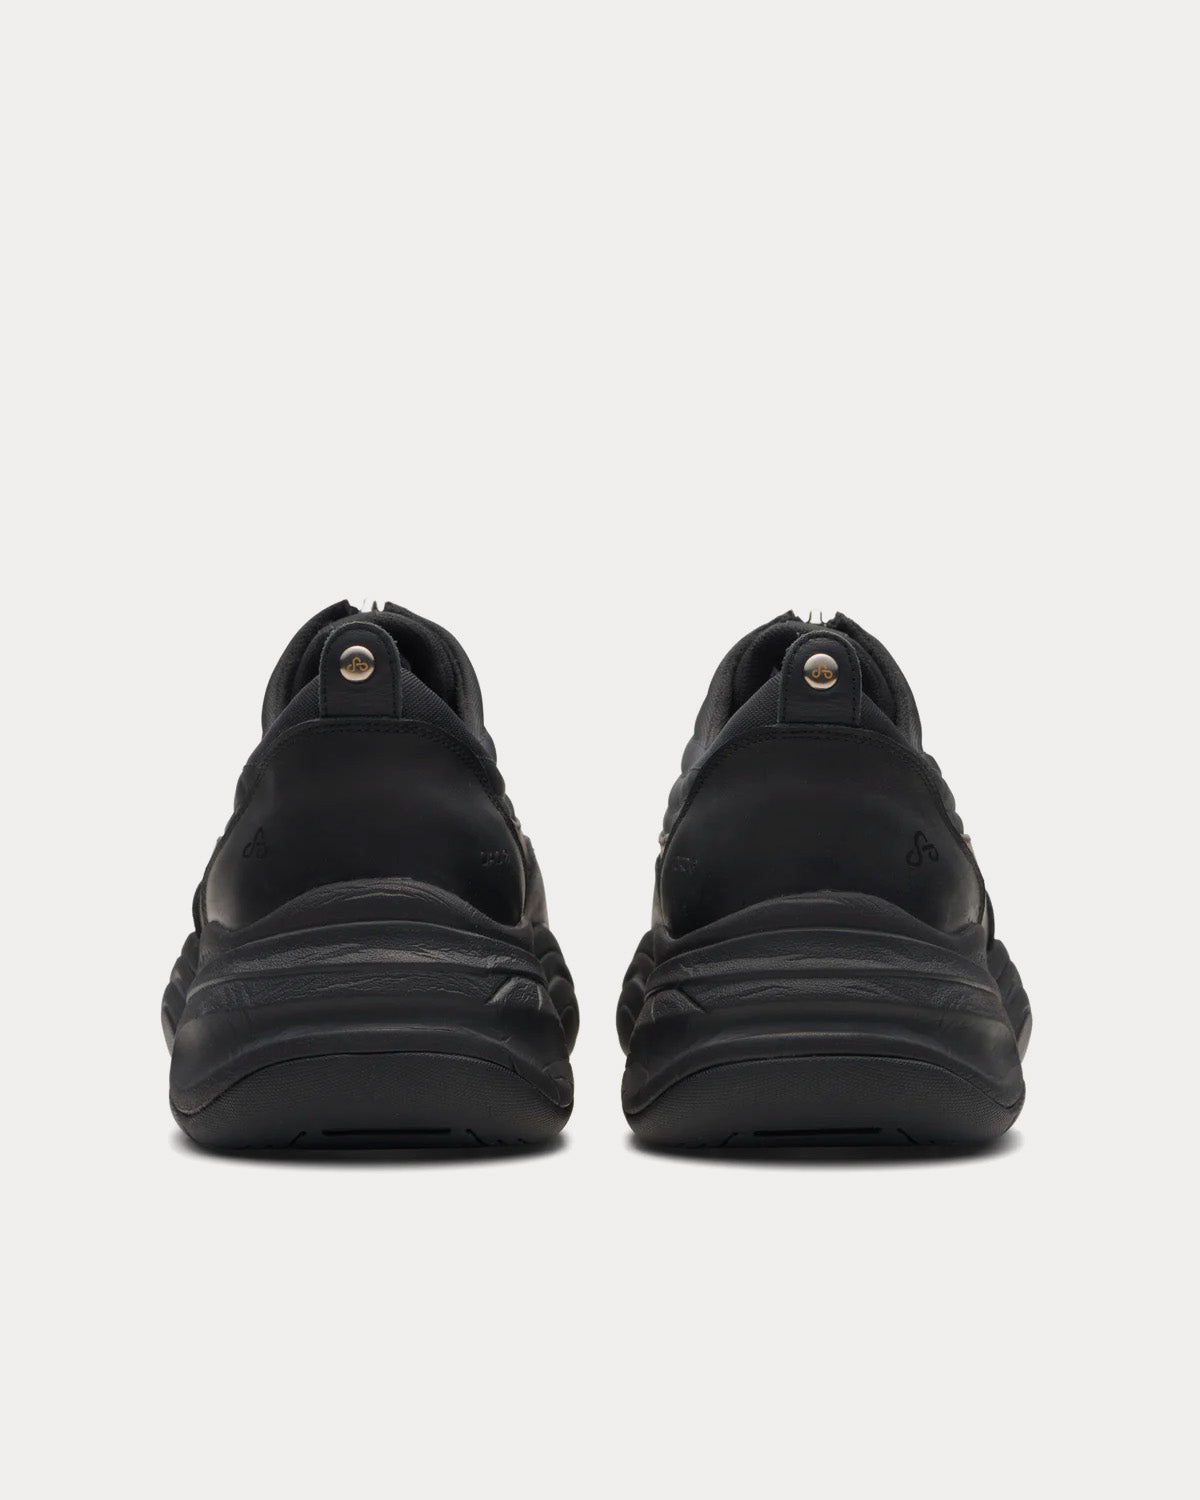 OAO - Fountain Black Low Top Sneakers